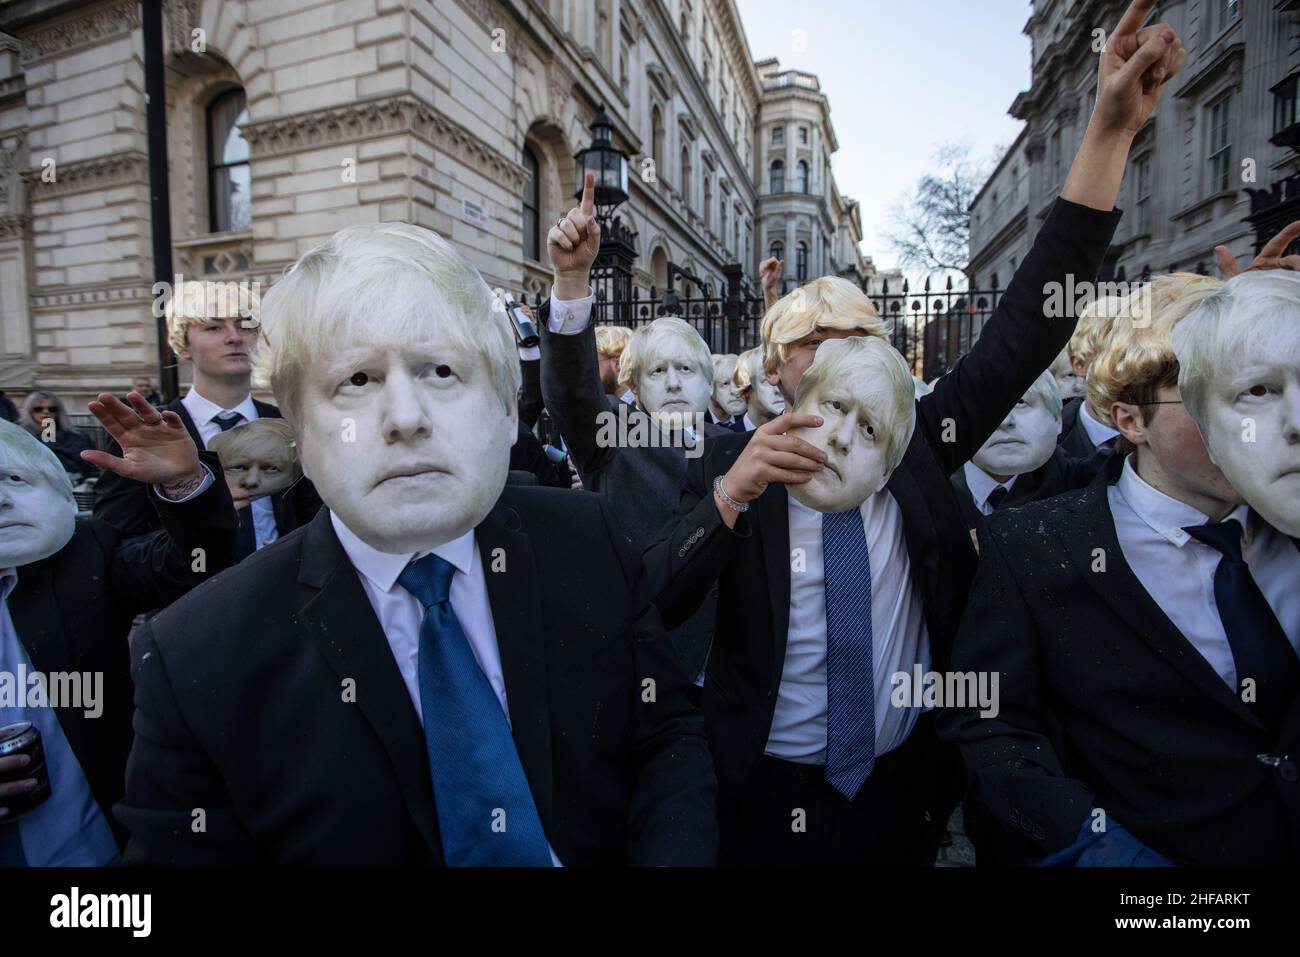 Flash-mob of 'partygate' anti-Boris Johnson protesters wearing floppy blond wigs and Boris Johnson Stock Photo